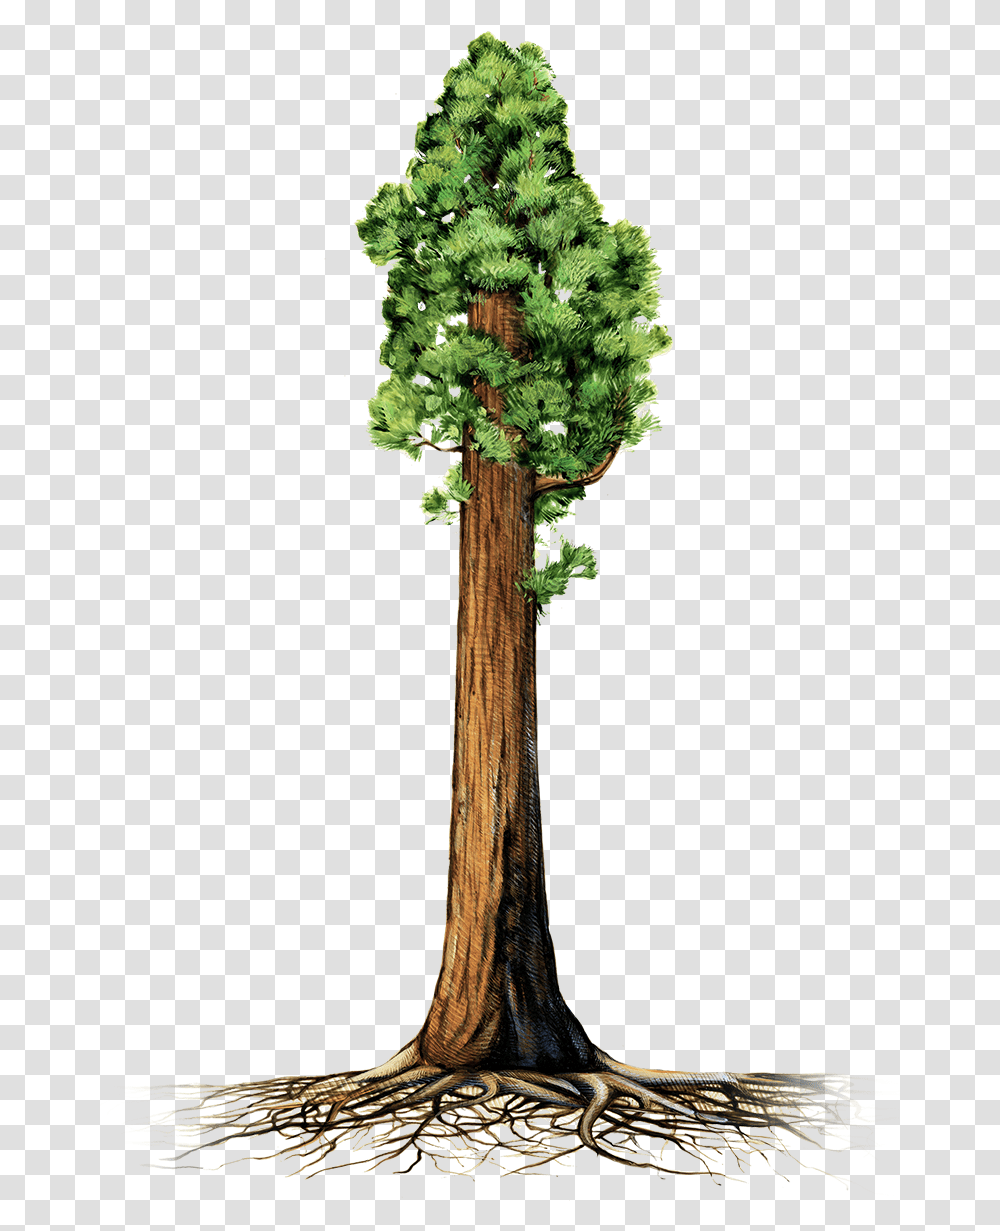 Giant Redwood Tree Clipart Image Sequoia Illustration, Plant, Conifer, Pine, Cross Transparent Png